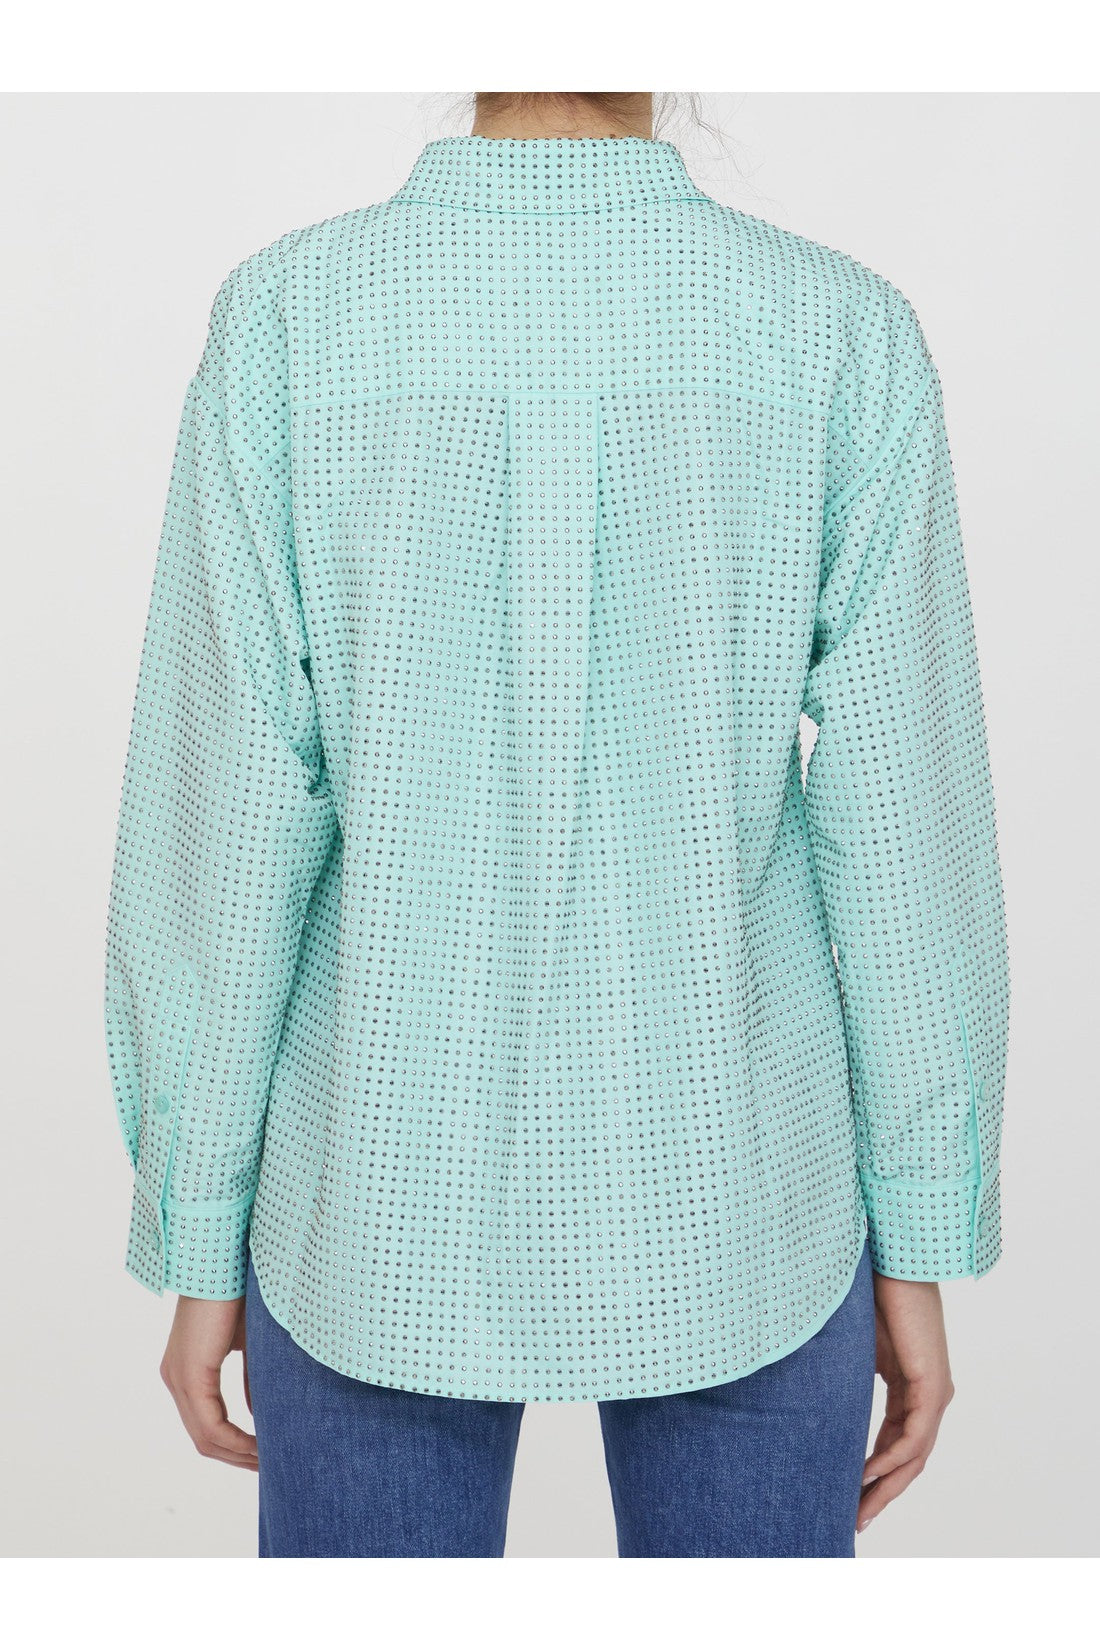 Turquoise rhinestone shirt